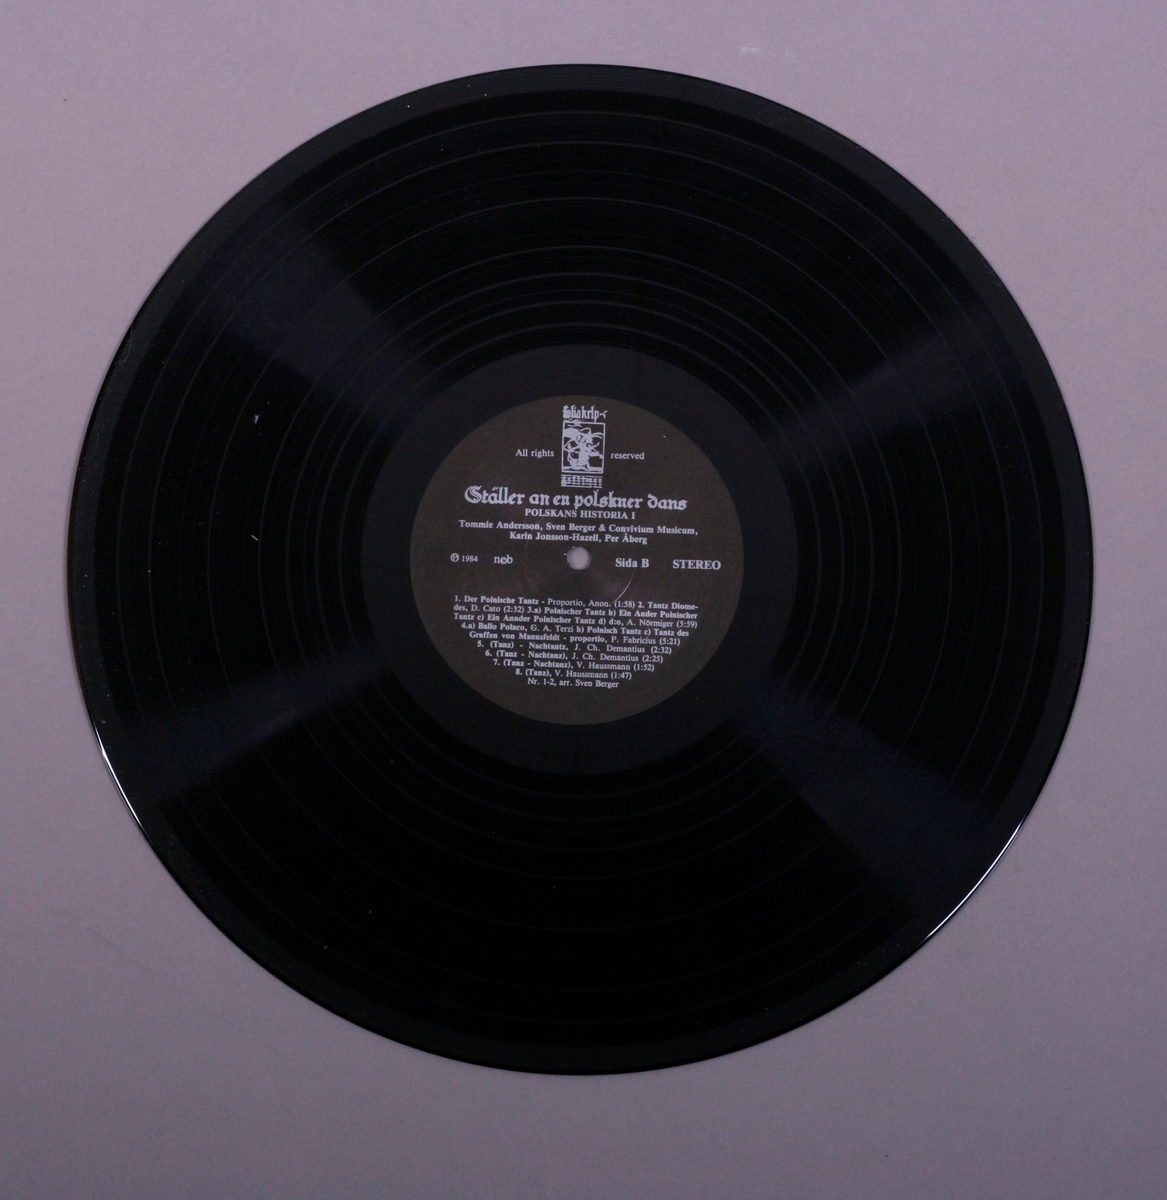 Grammofonplate i svart vinyl og plateomslag i papp. Plata ligger i en papirlomme. Teksthefte i papir.